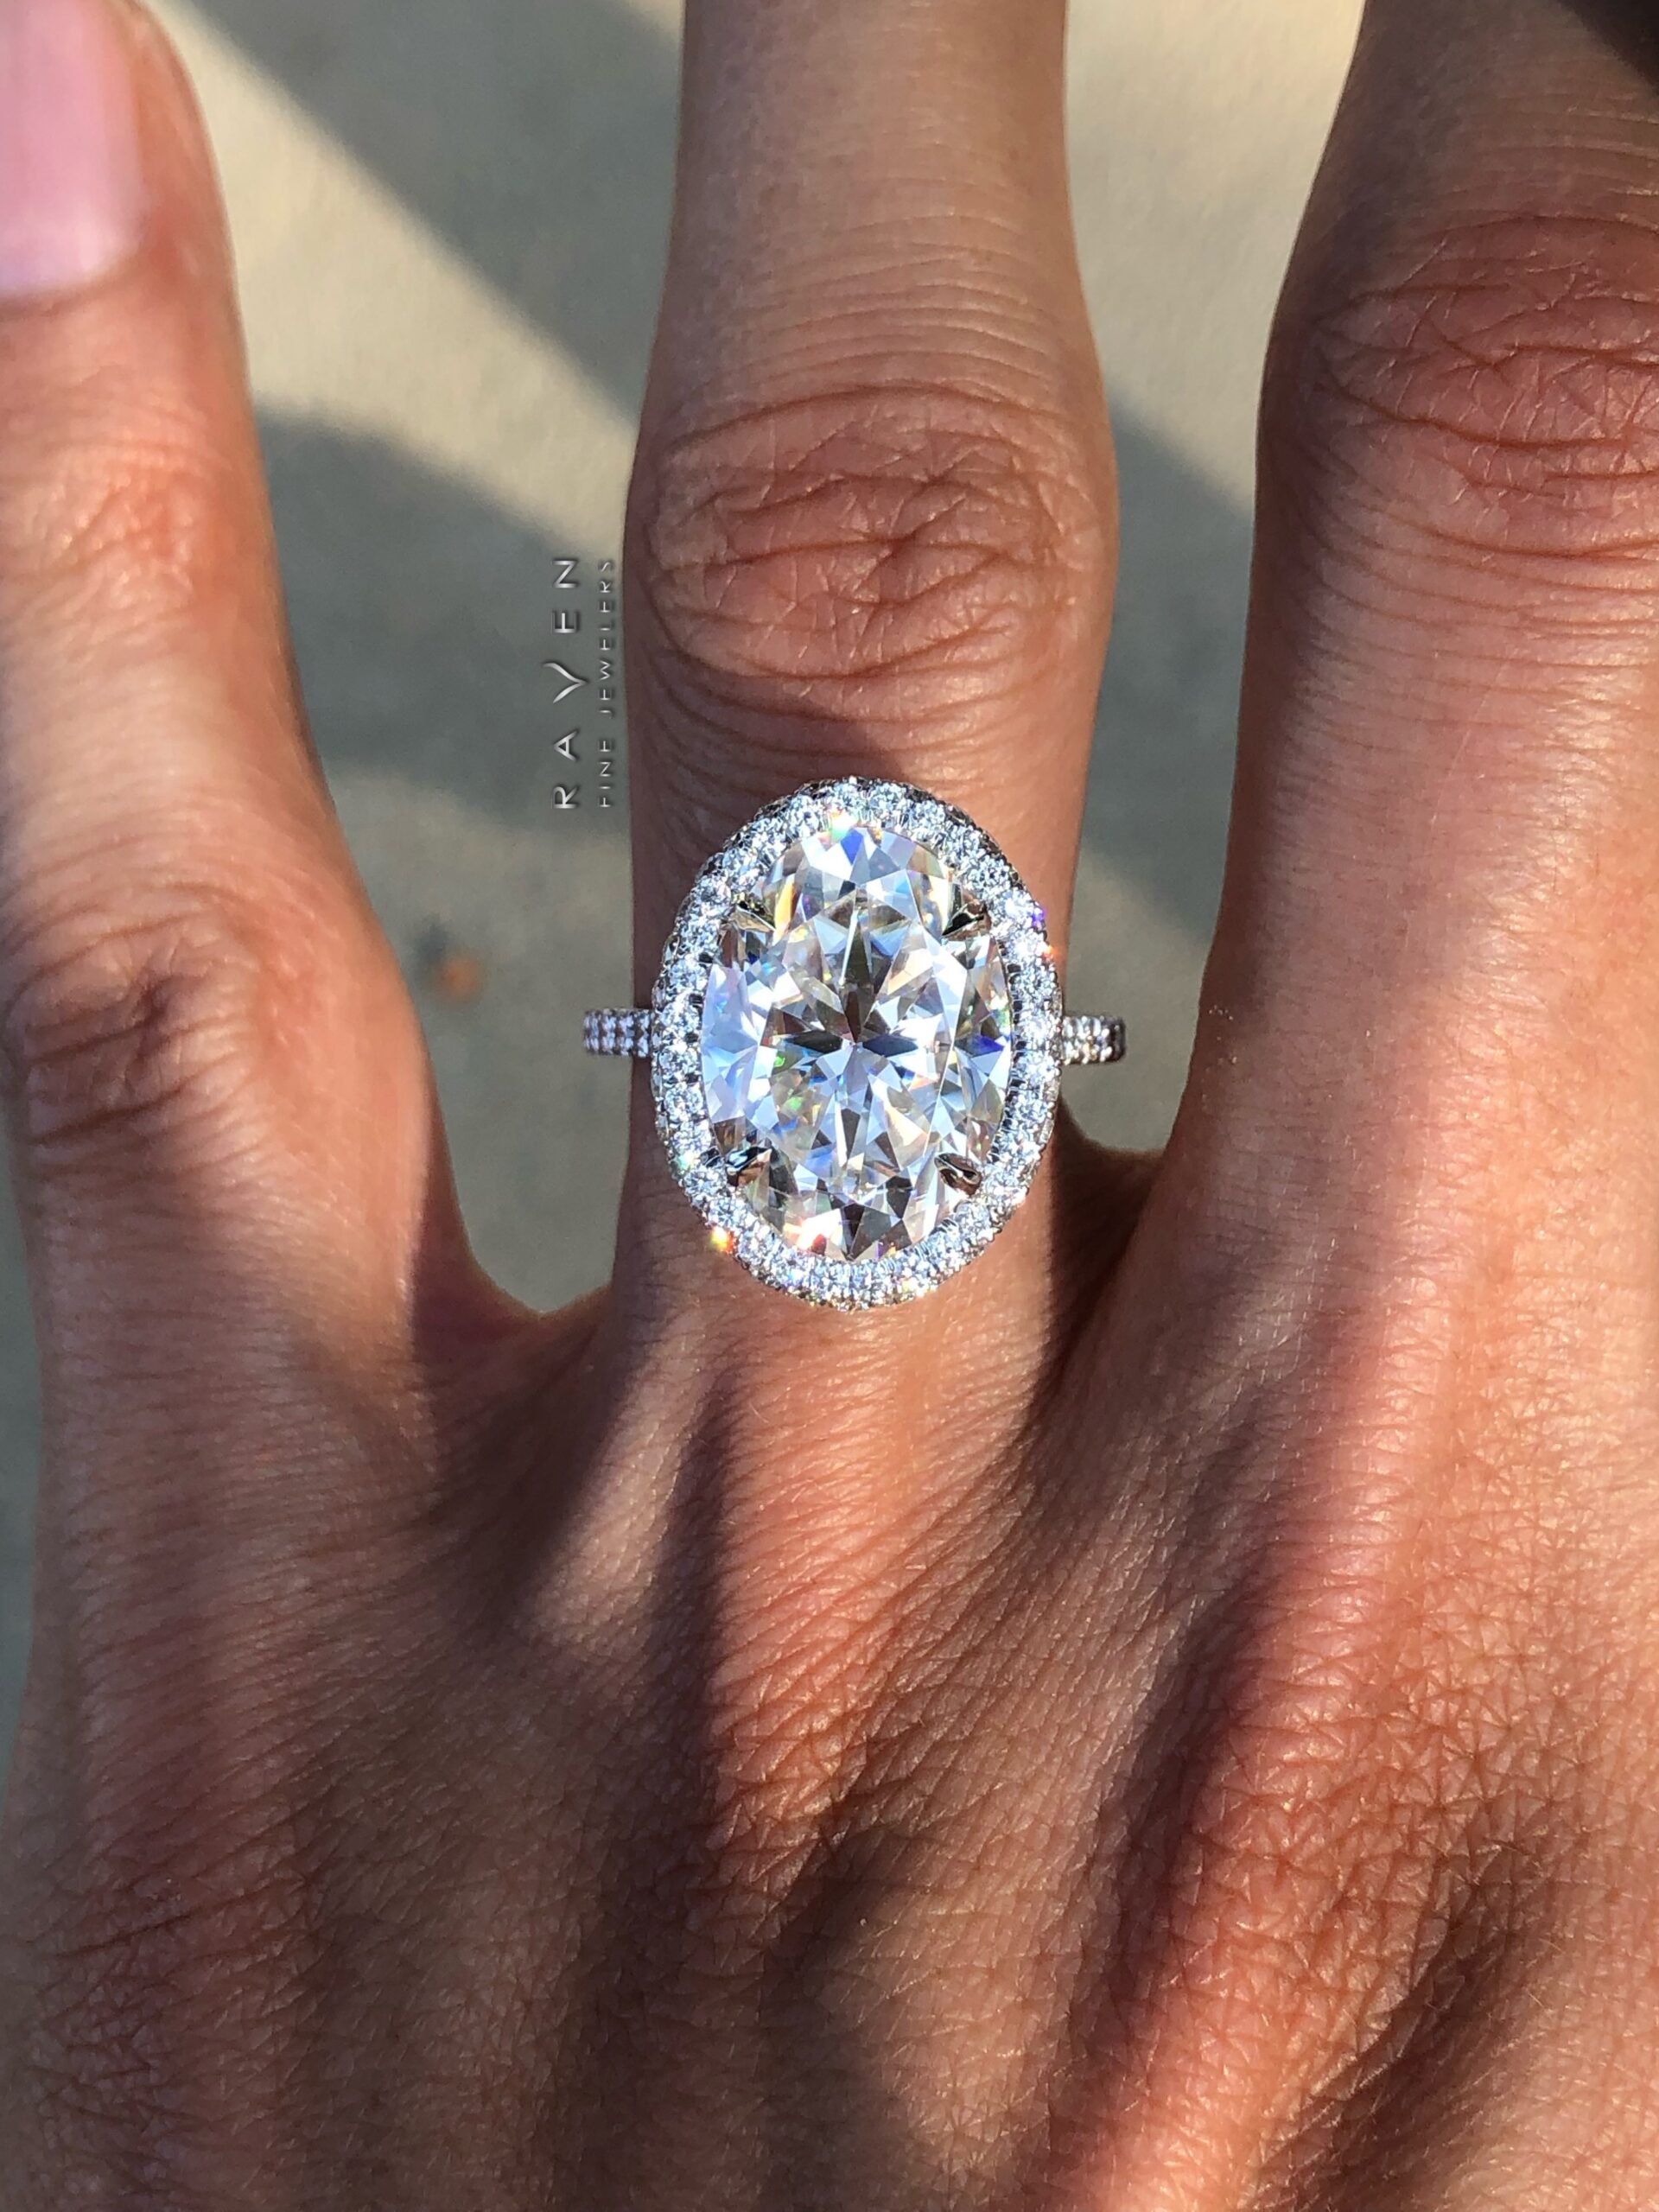 7 Carat Diamond Ring: Spectacular and Powerful | Diamond Registry